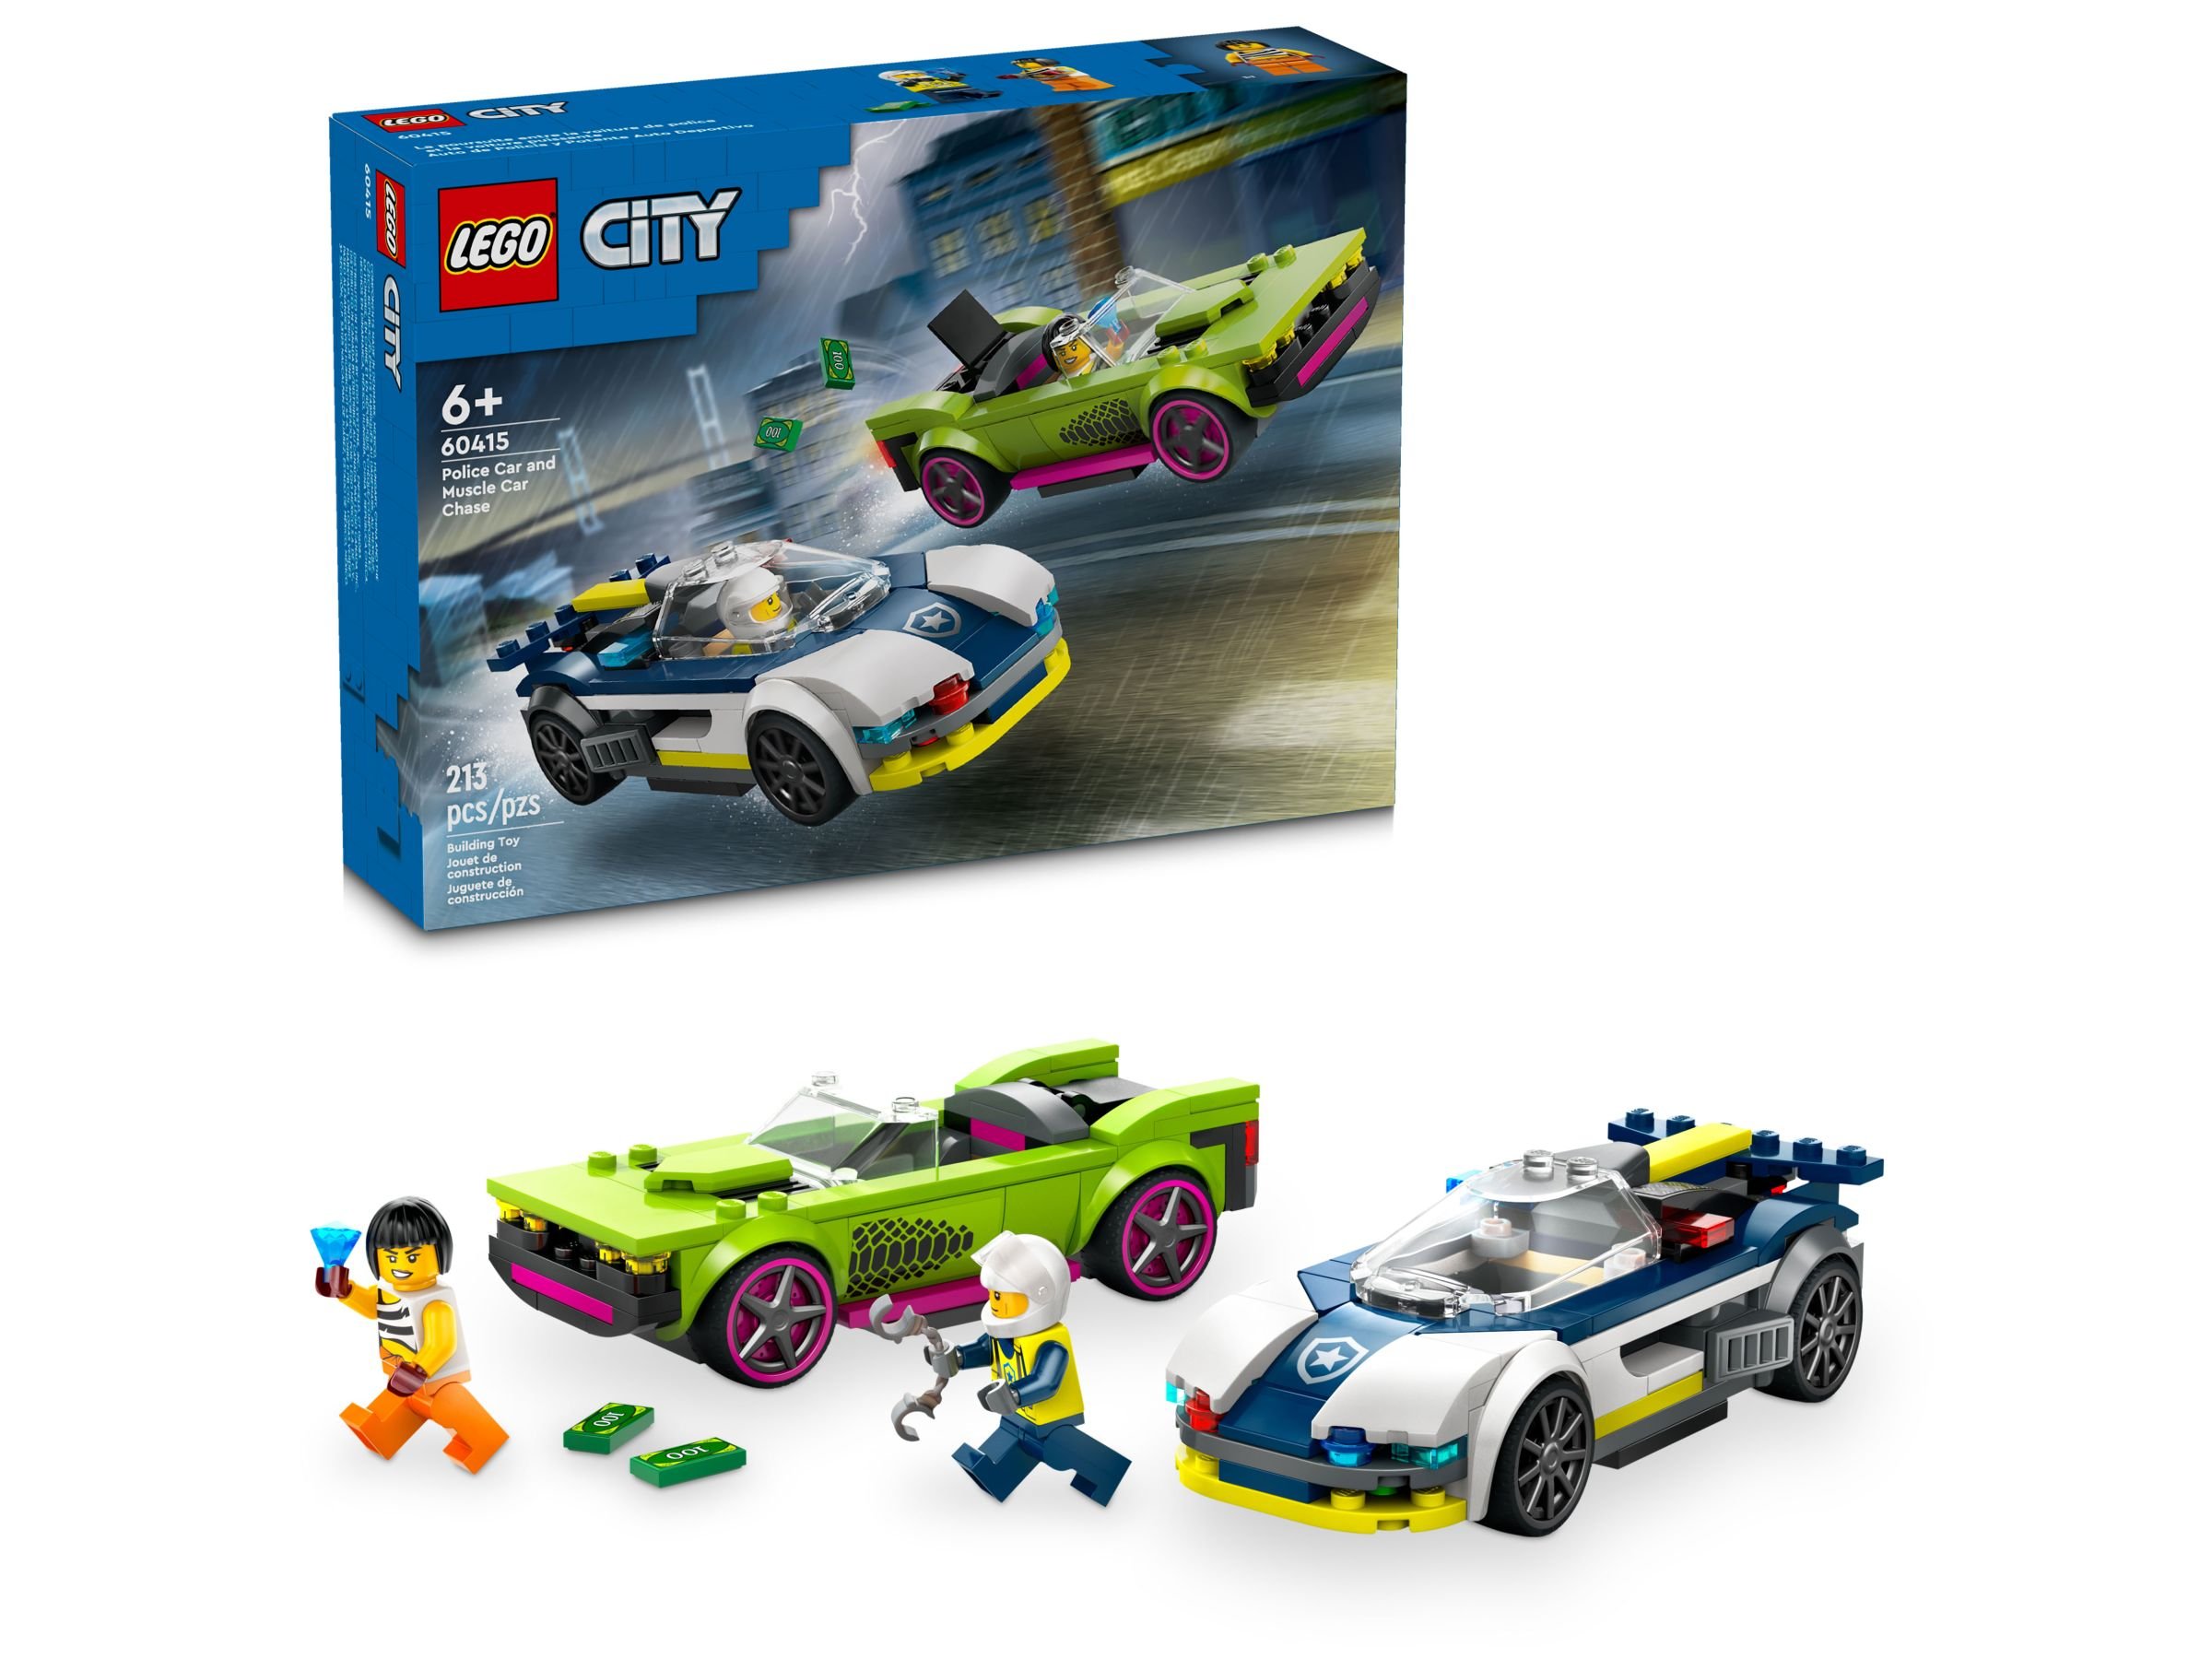 LEGO City 60415 Verfolgungsjagd mit Polizeiauto und Muscle Car LEGO_60415.jpg